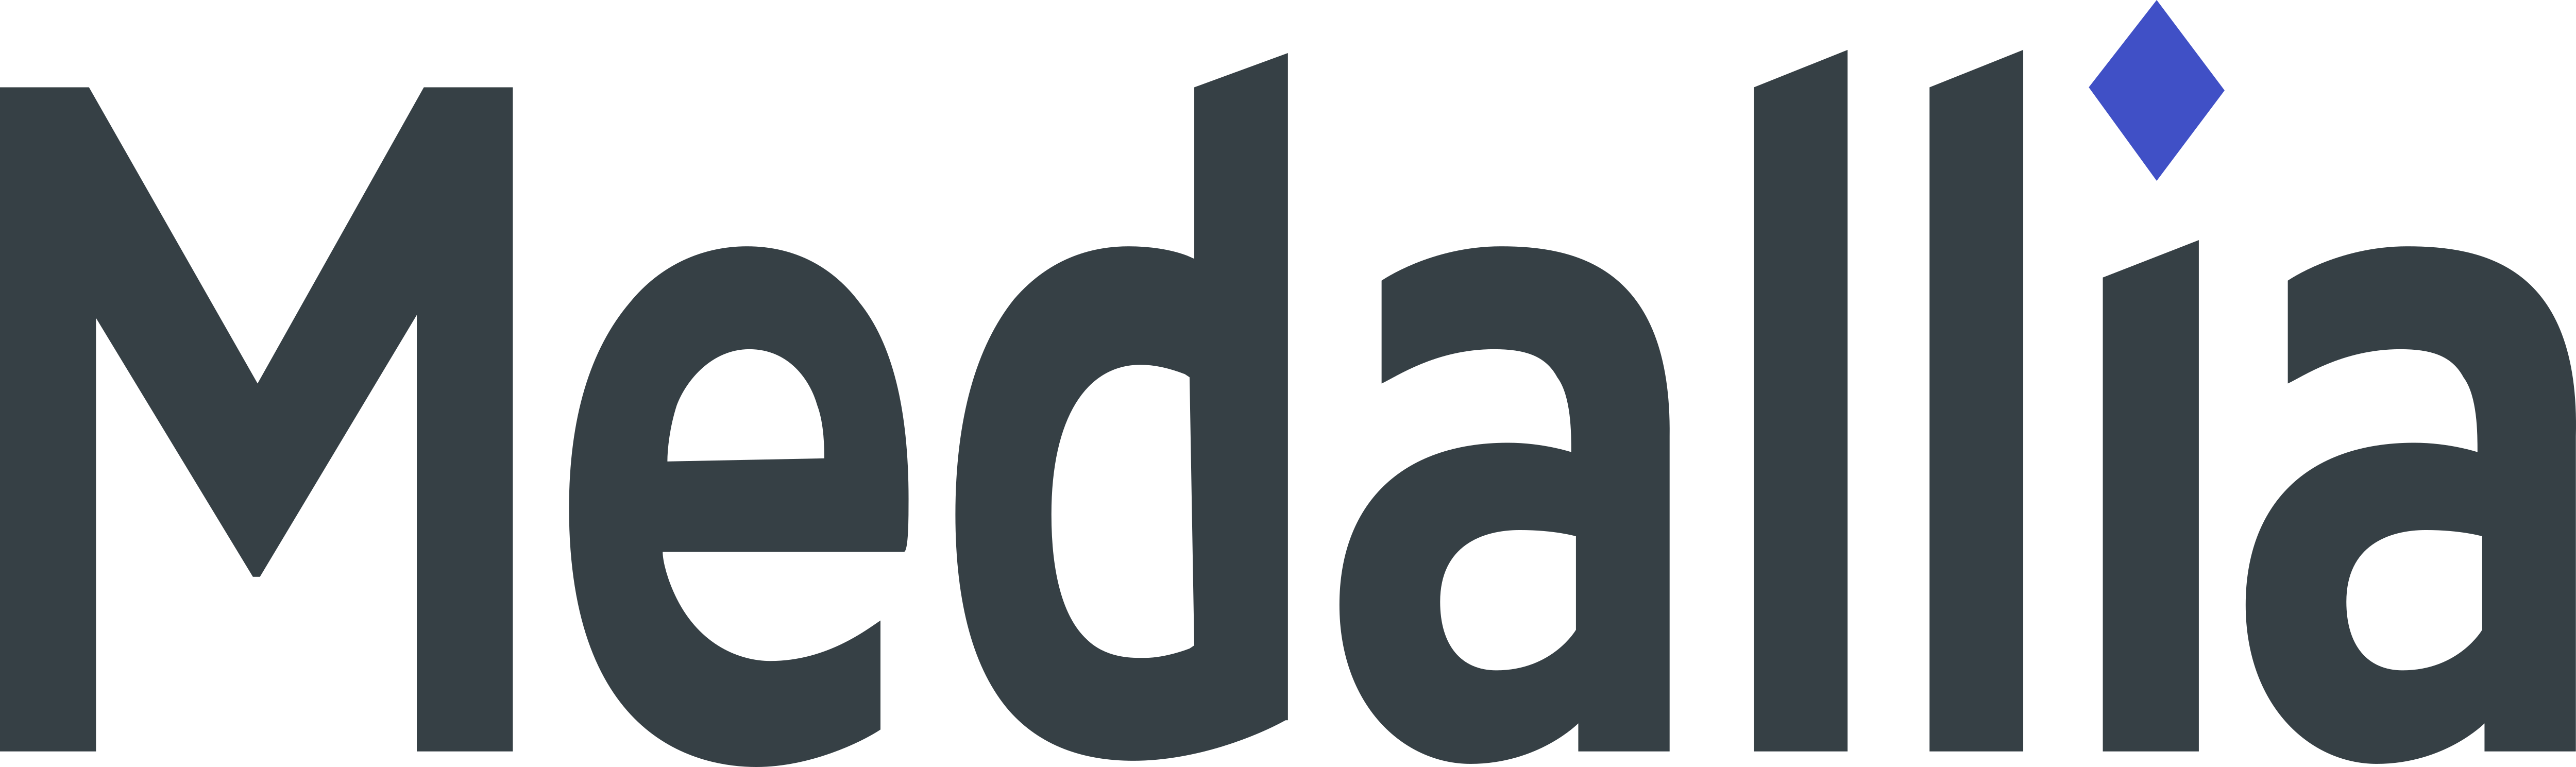 Medallia – Logos Download